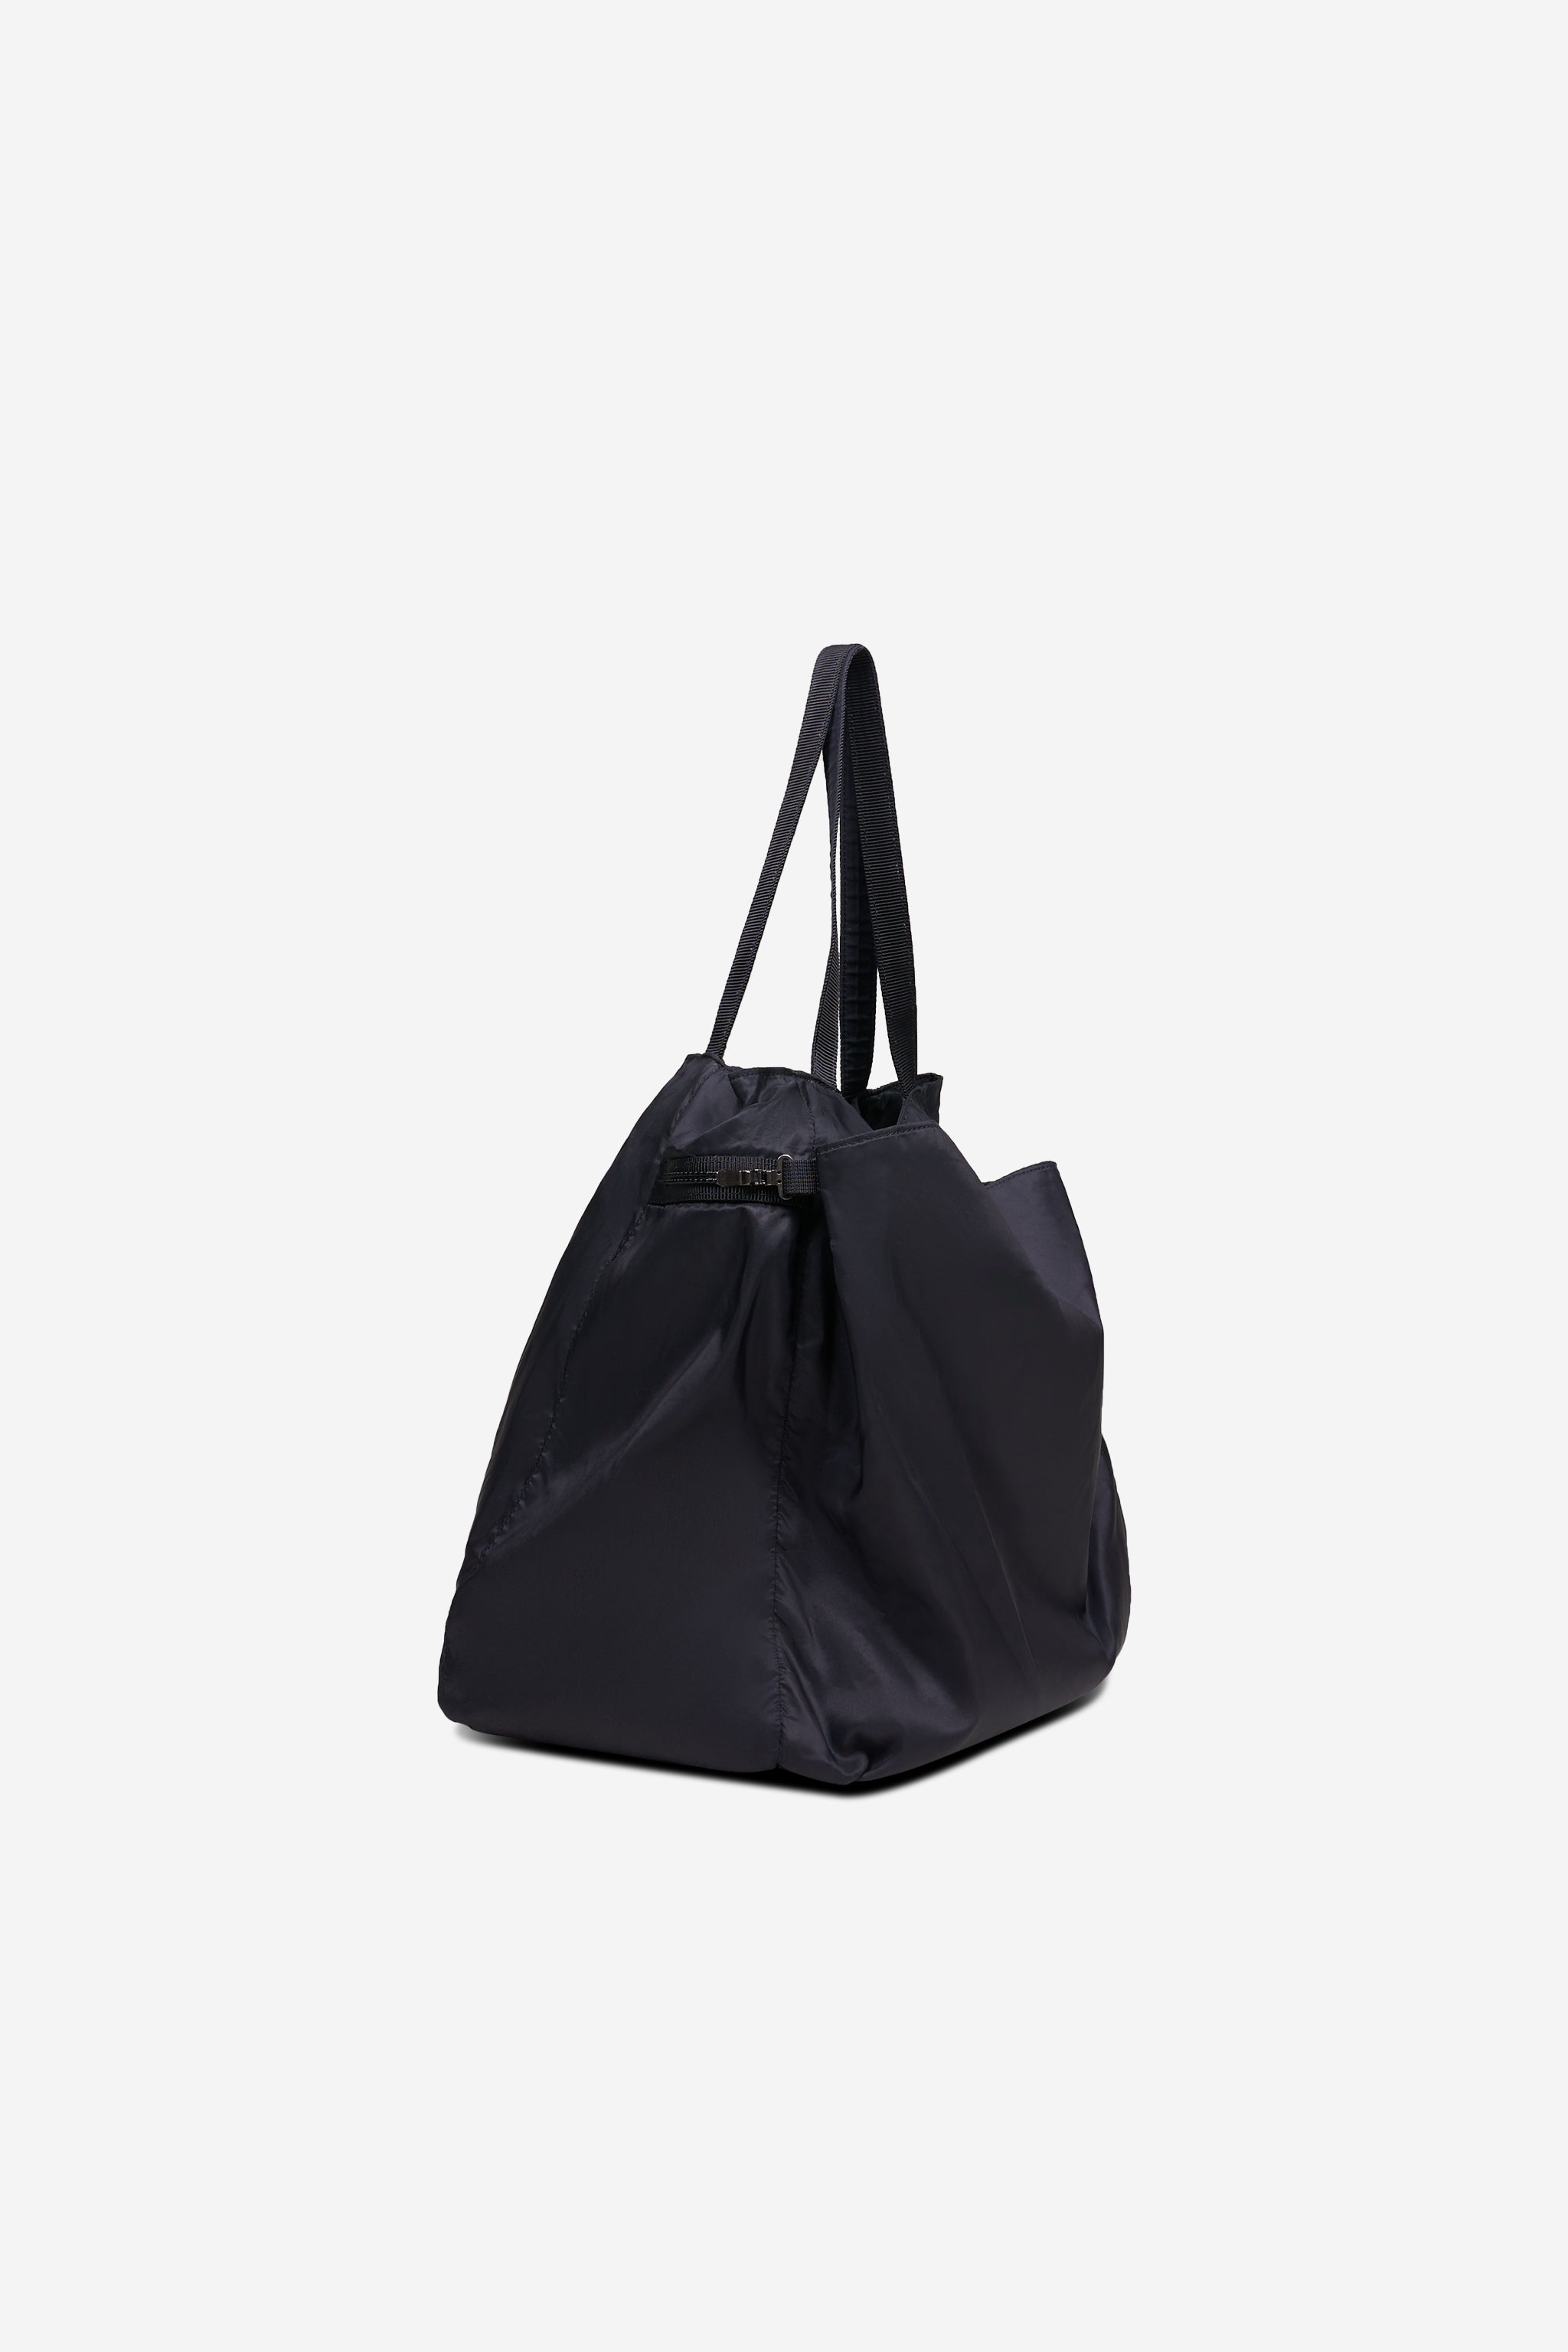 Yamamot black bag